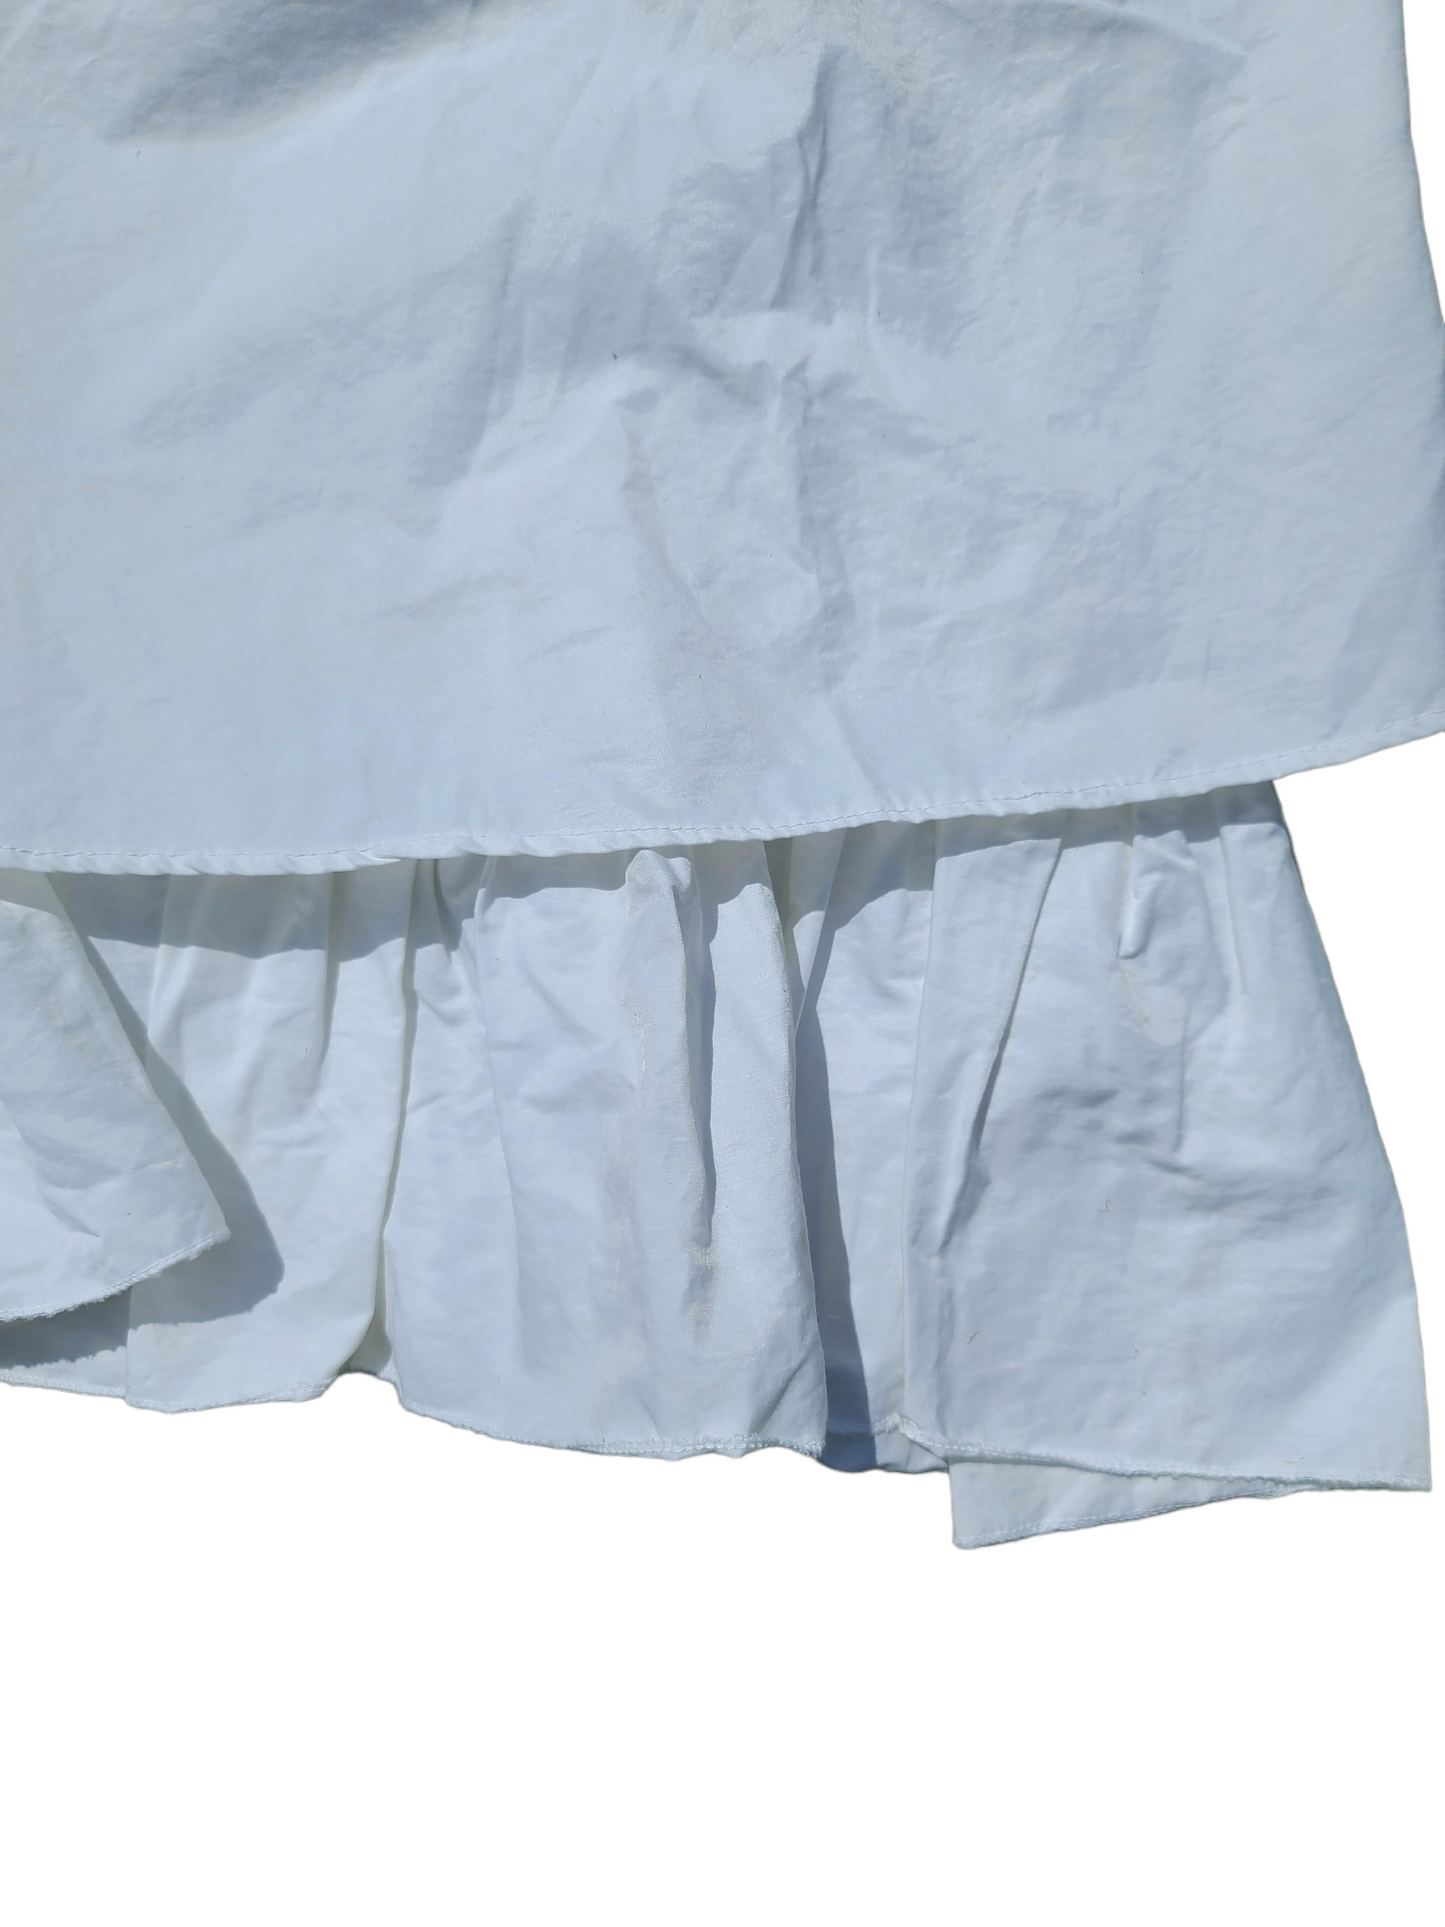 Maxi skirt coquette y2k blanche